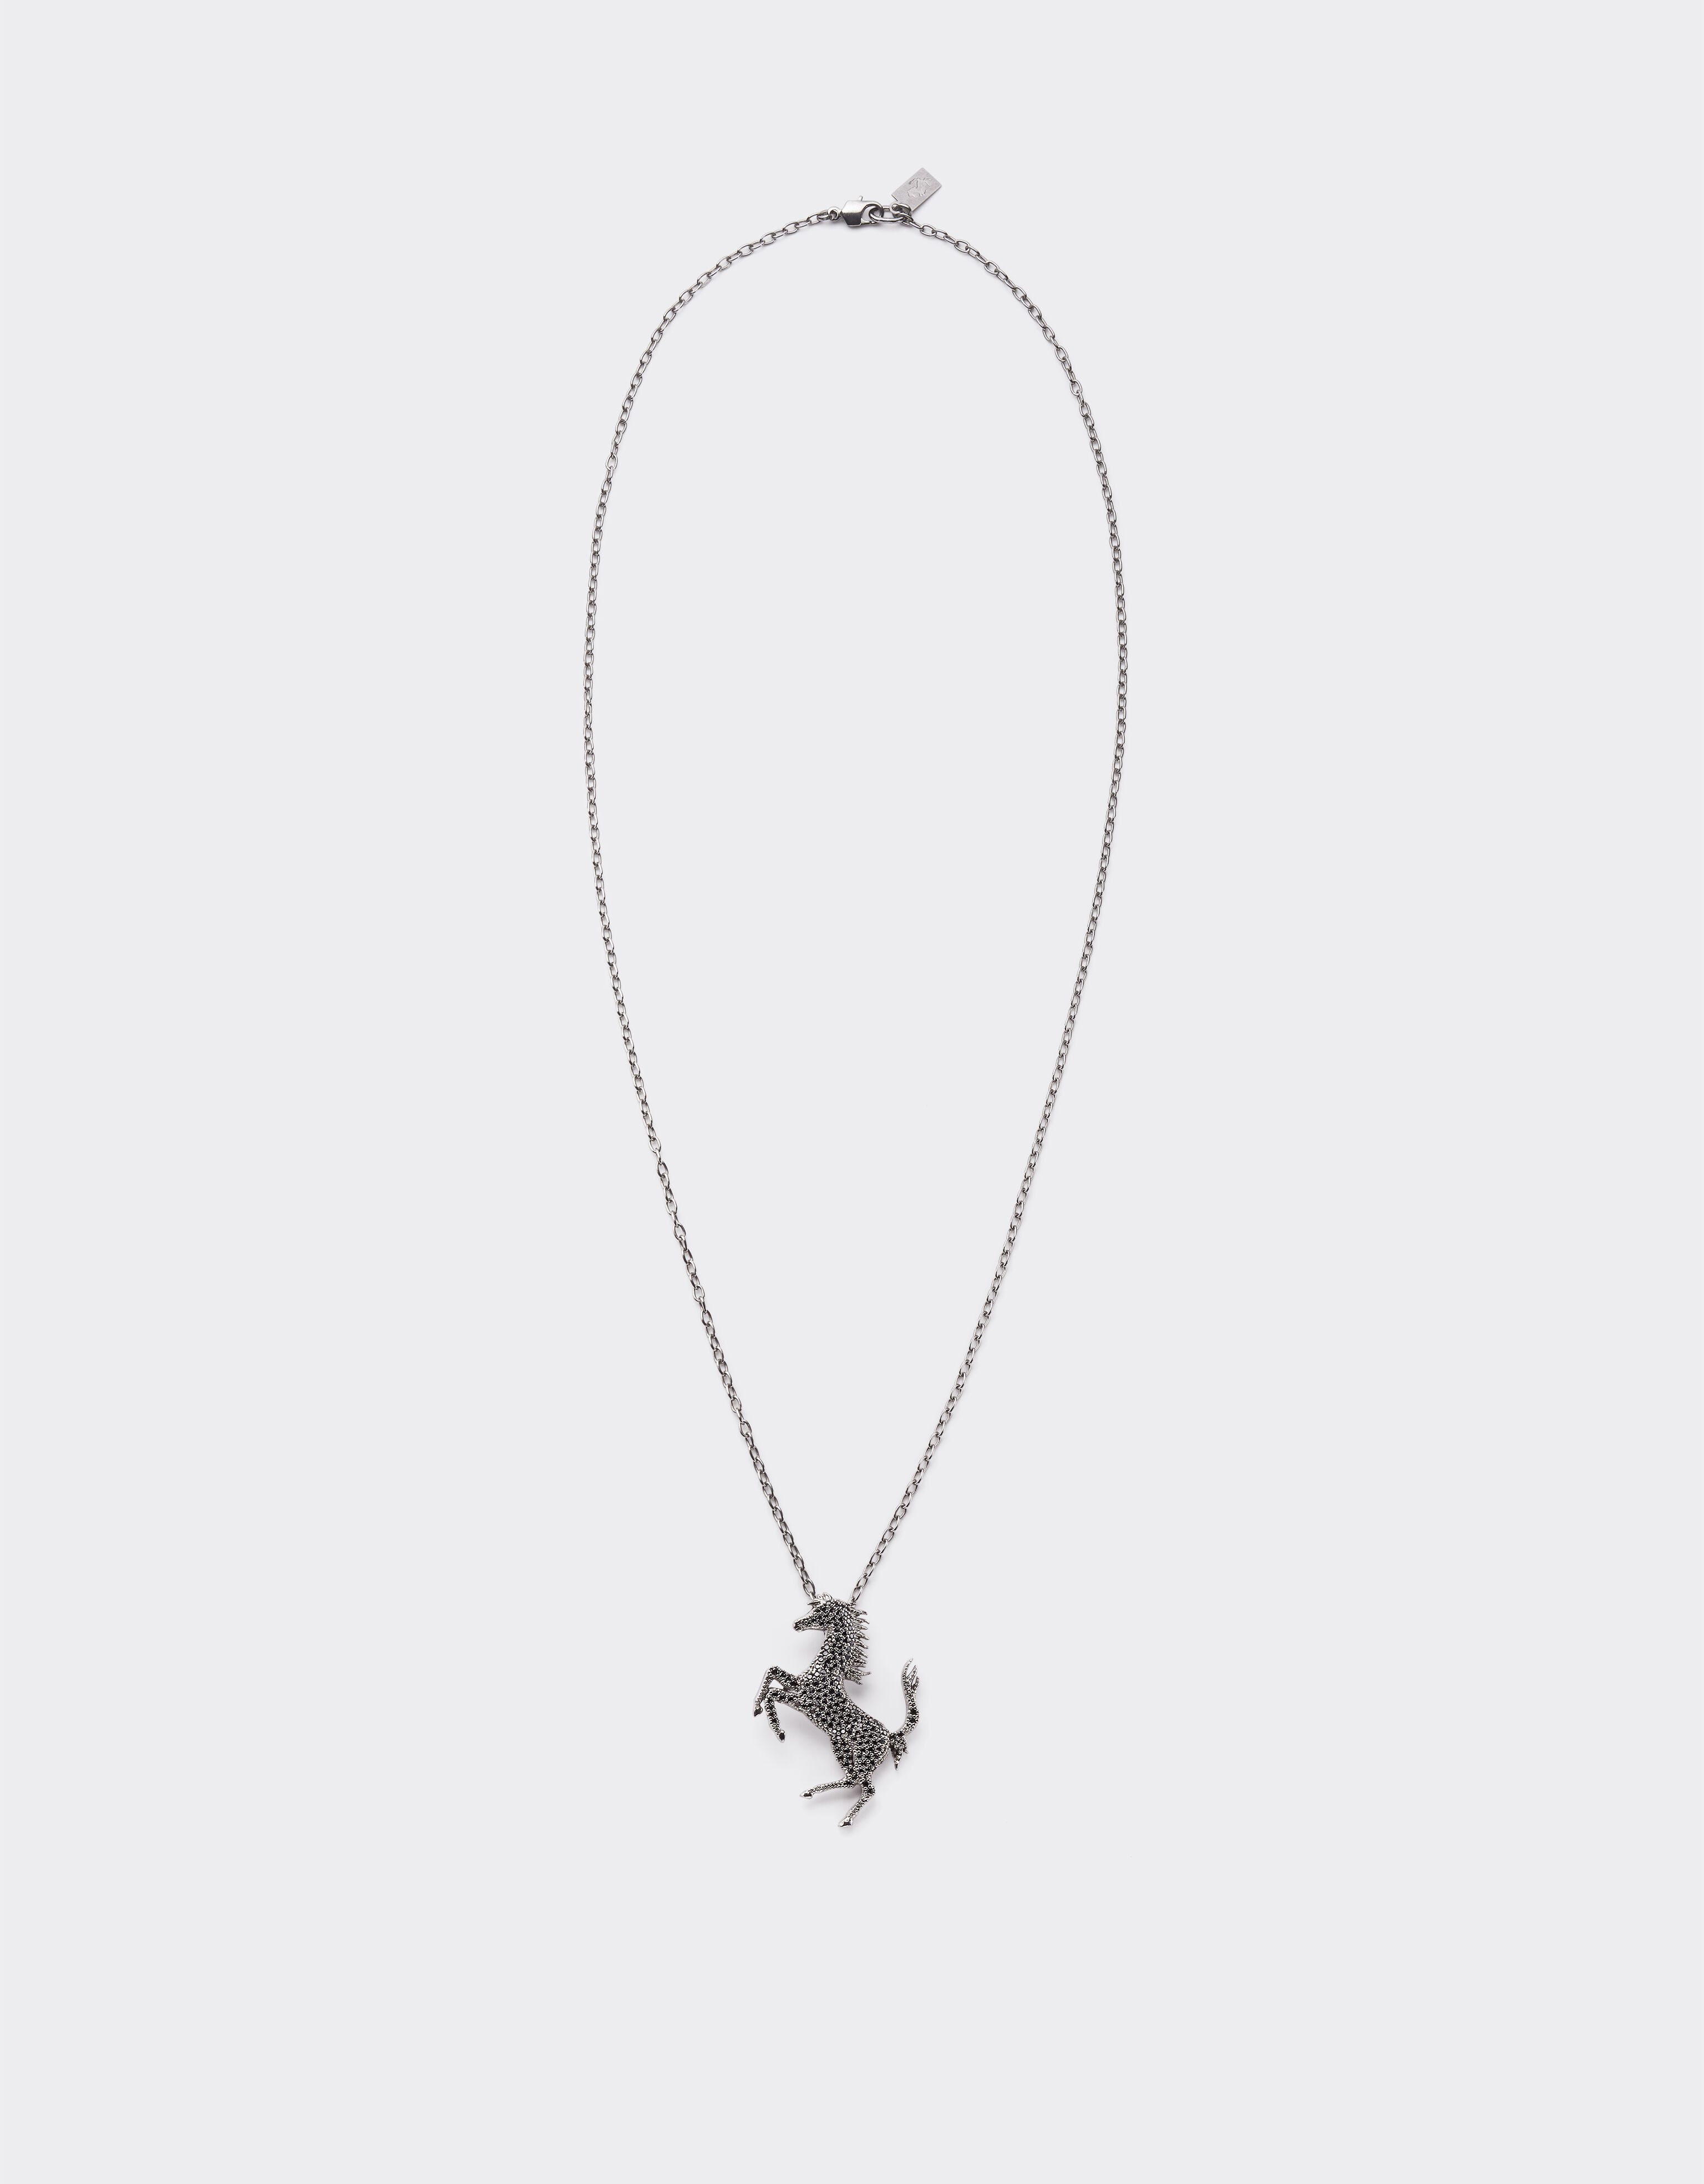 Ferrari Prancing Horse necklace with rhinestones Black 20211f